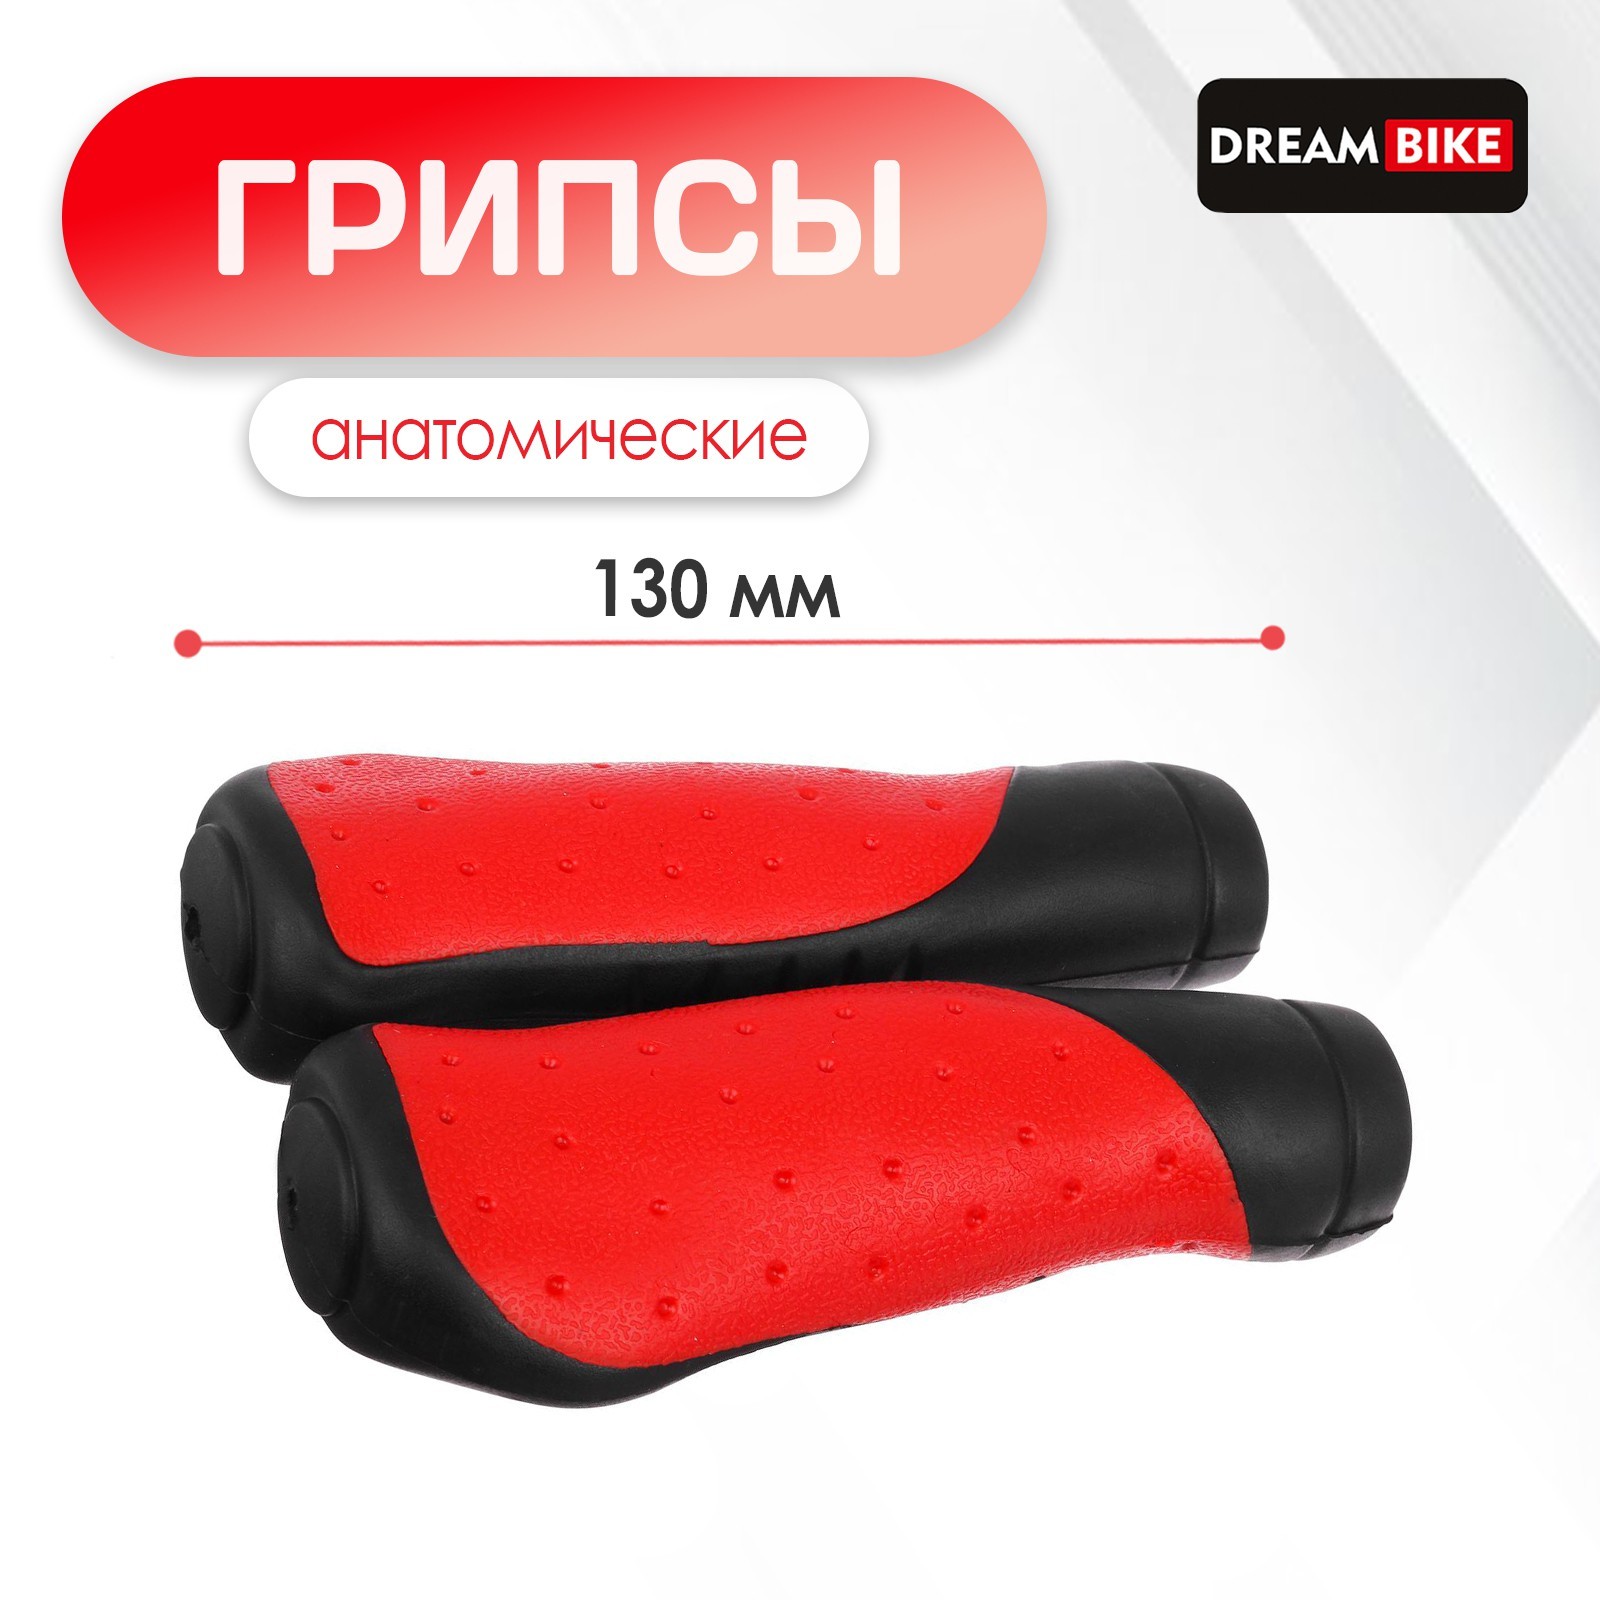 Грипсы Dream Bike, 4089549, 130 мм цвет черный, красный